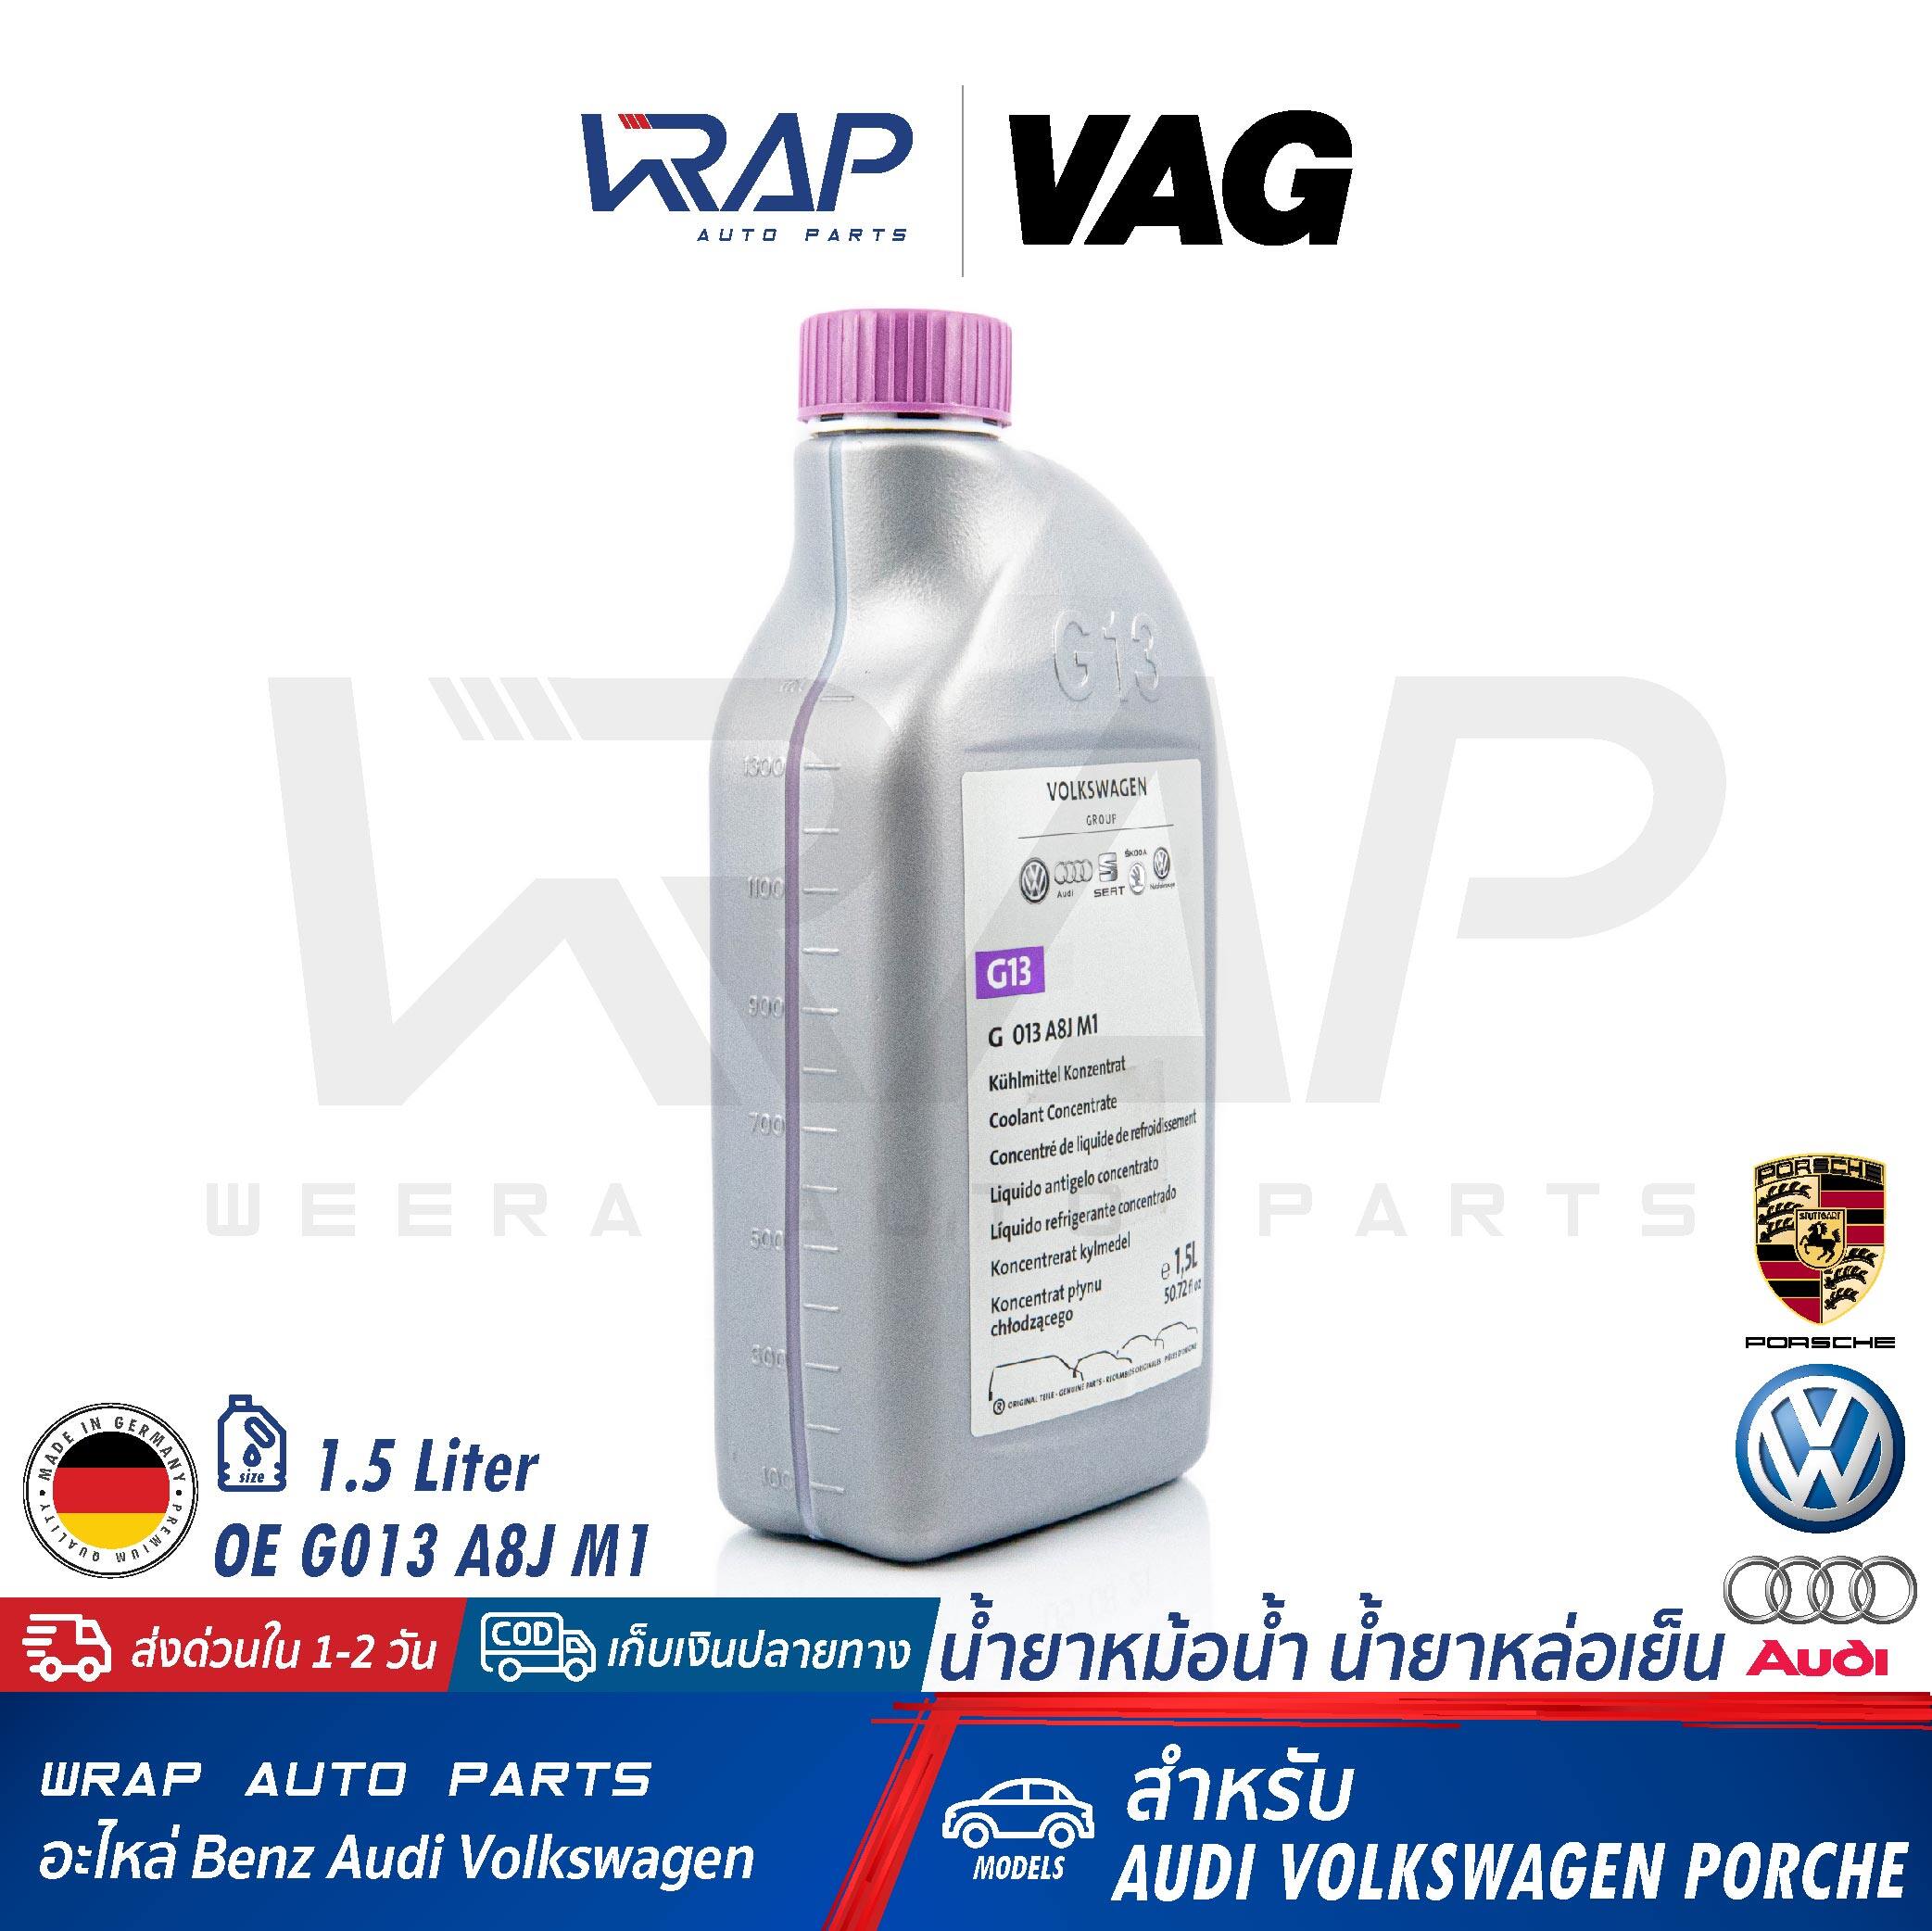 ⭐ AUDI VW Porsche ⭐ น้ำยาหม้อน้ำ VAG แท้ G12 EVO / G13 สีม่วง, สำหรับรถยนต์ทุกรุ่น ขนาด 1 ลิตร, OE G 12E 050 A2, MADE IN GERMANY, VAG  SEAT น้ำยาหล่อเย็น